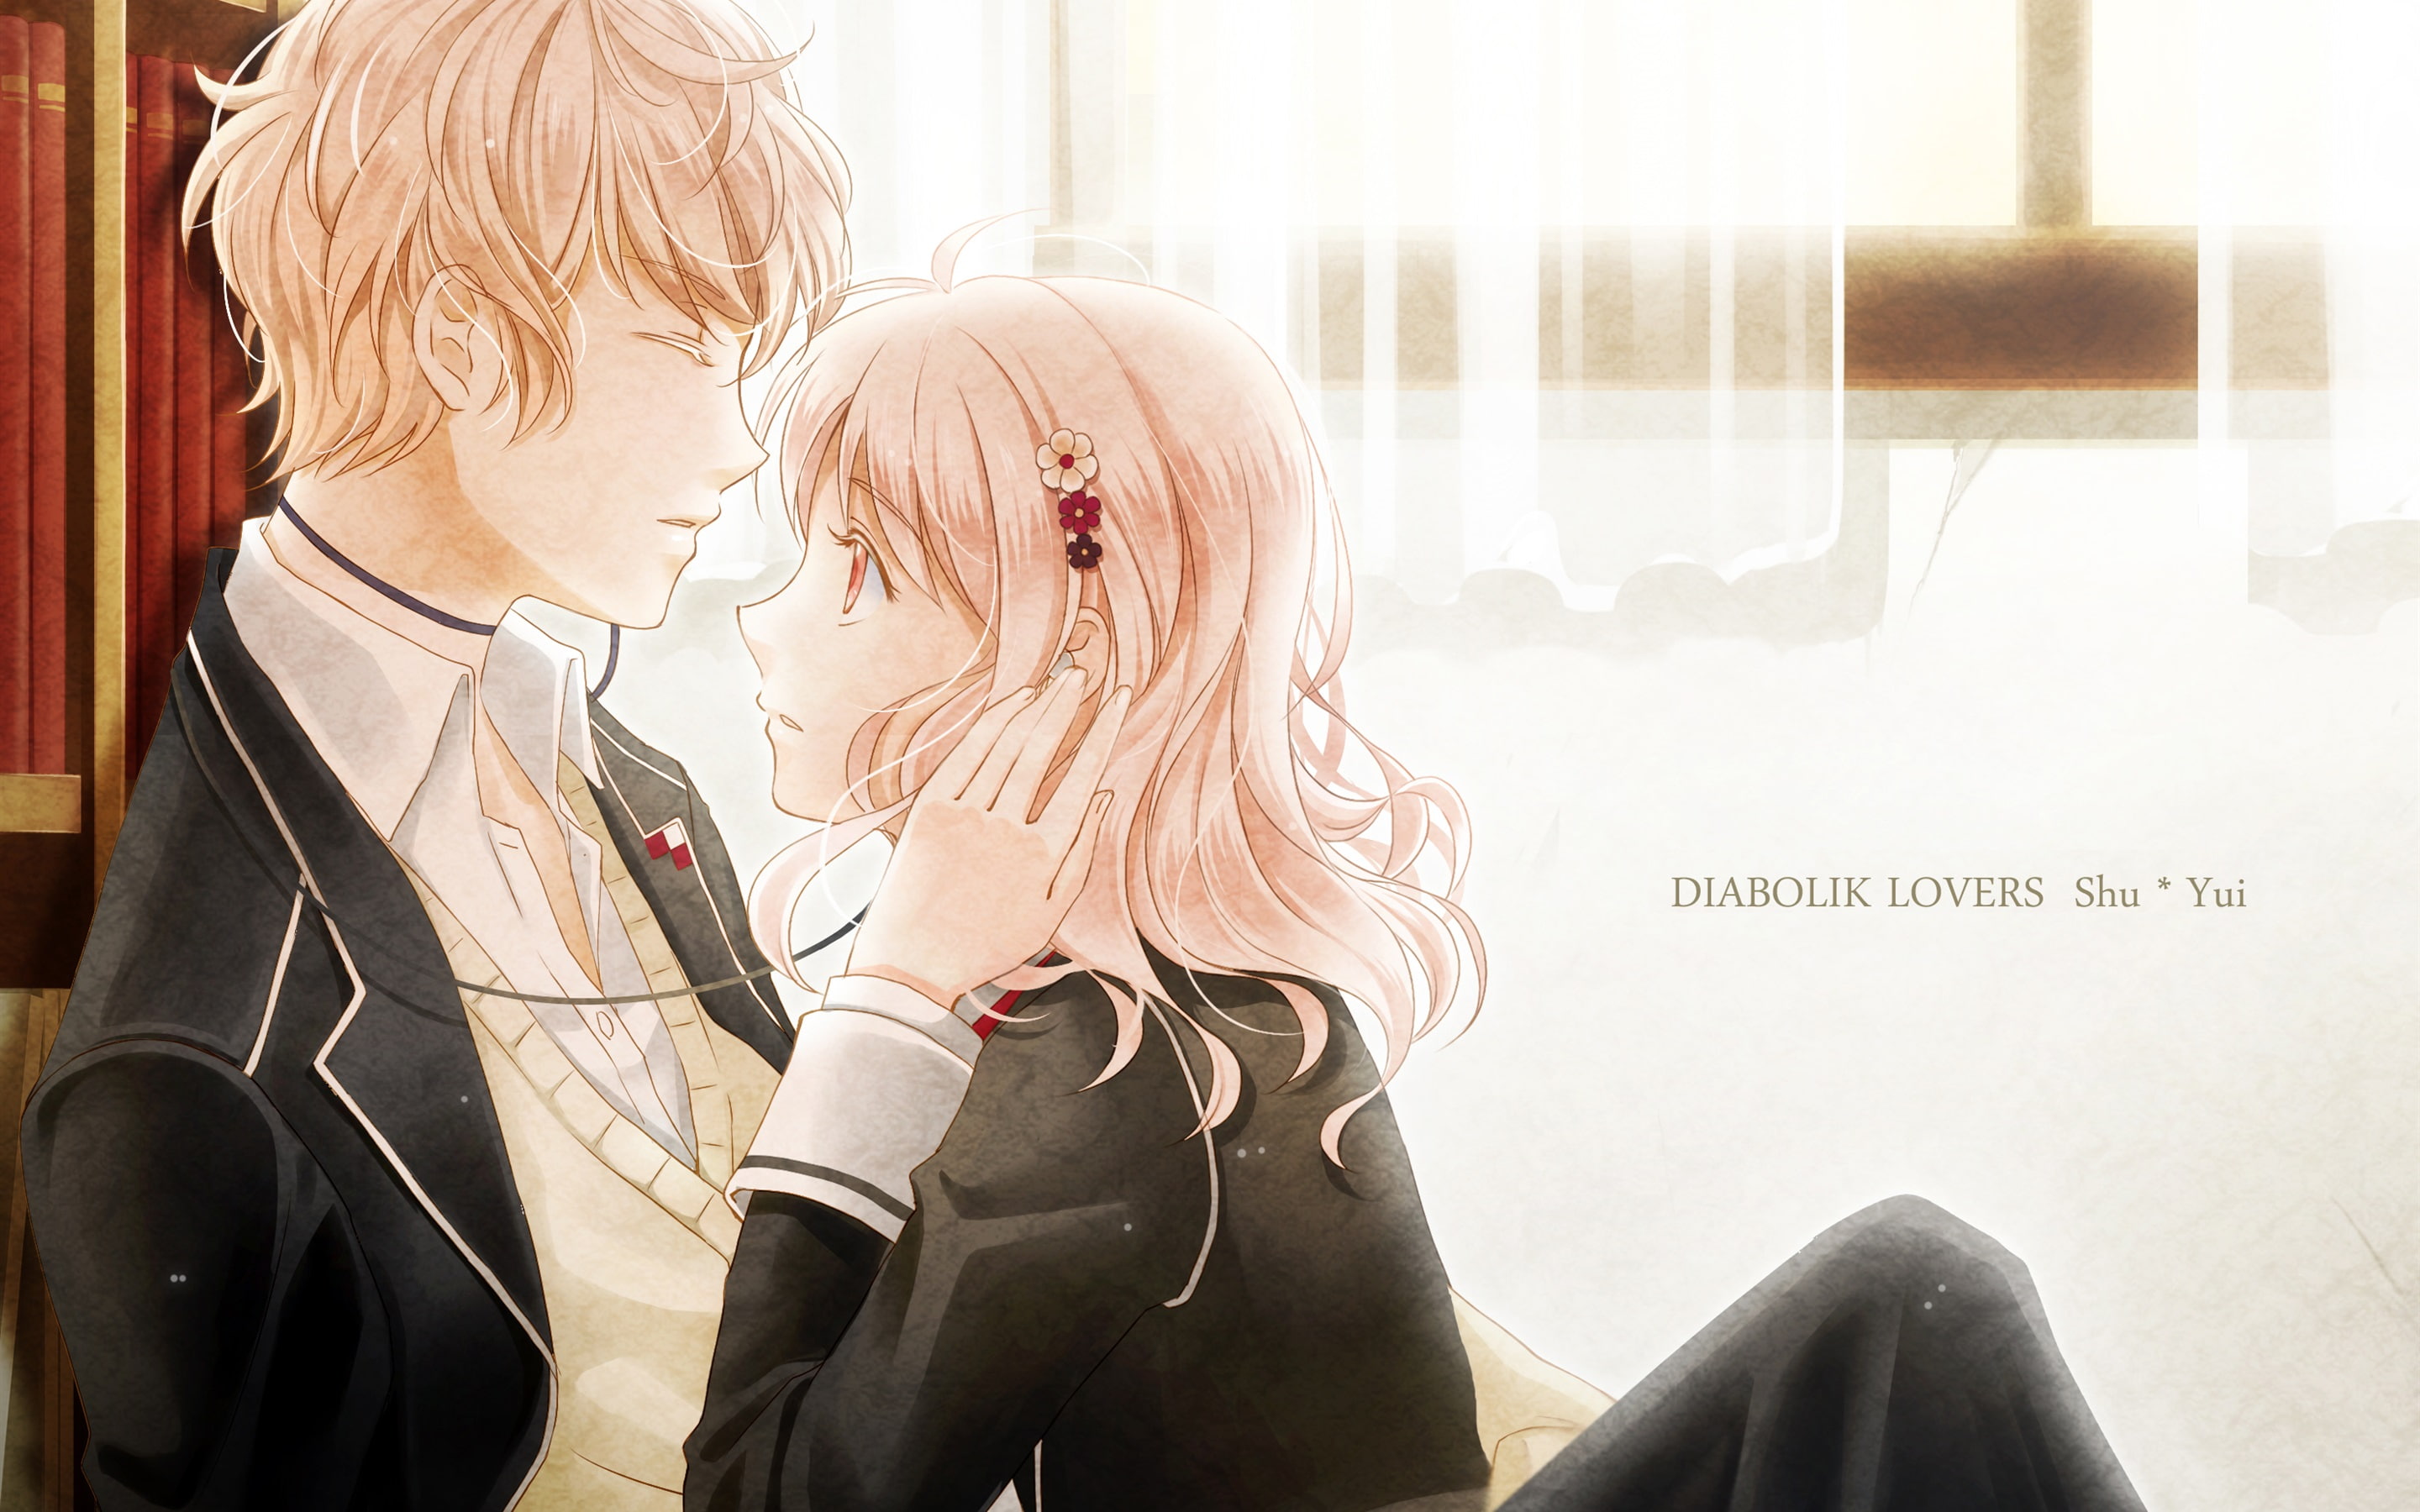 Diabolik Lovers, anime girl and boy